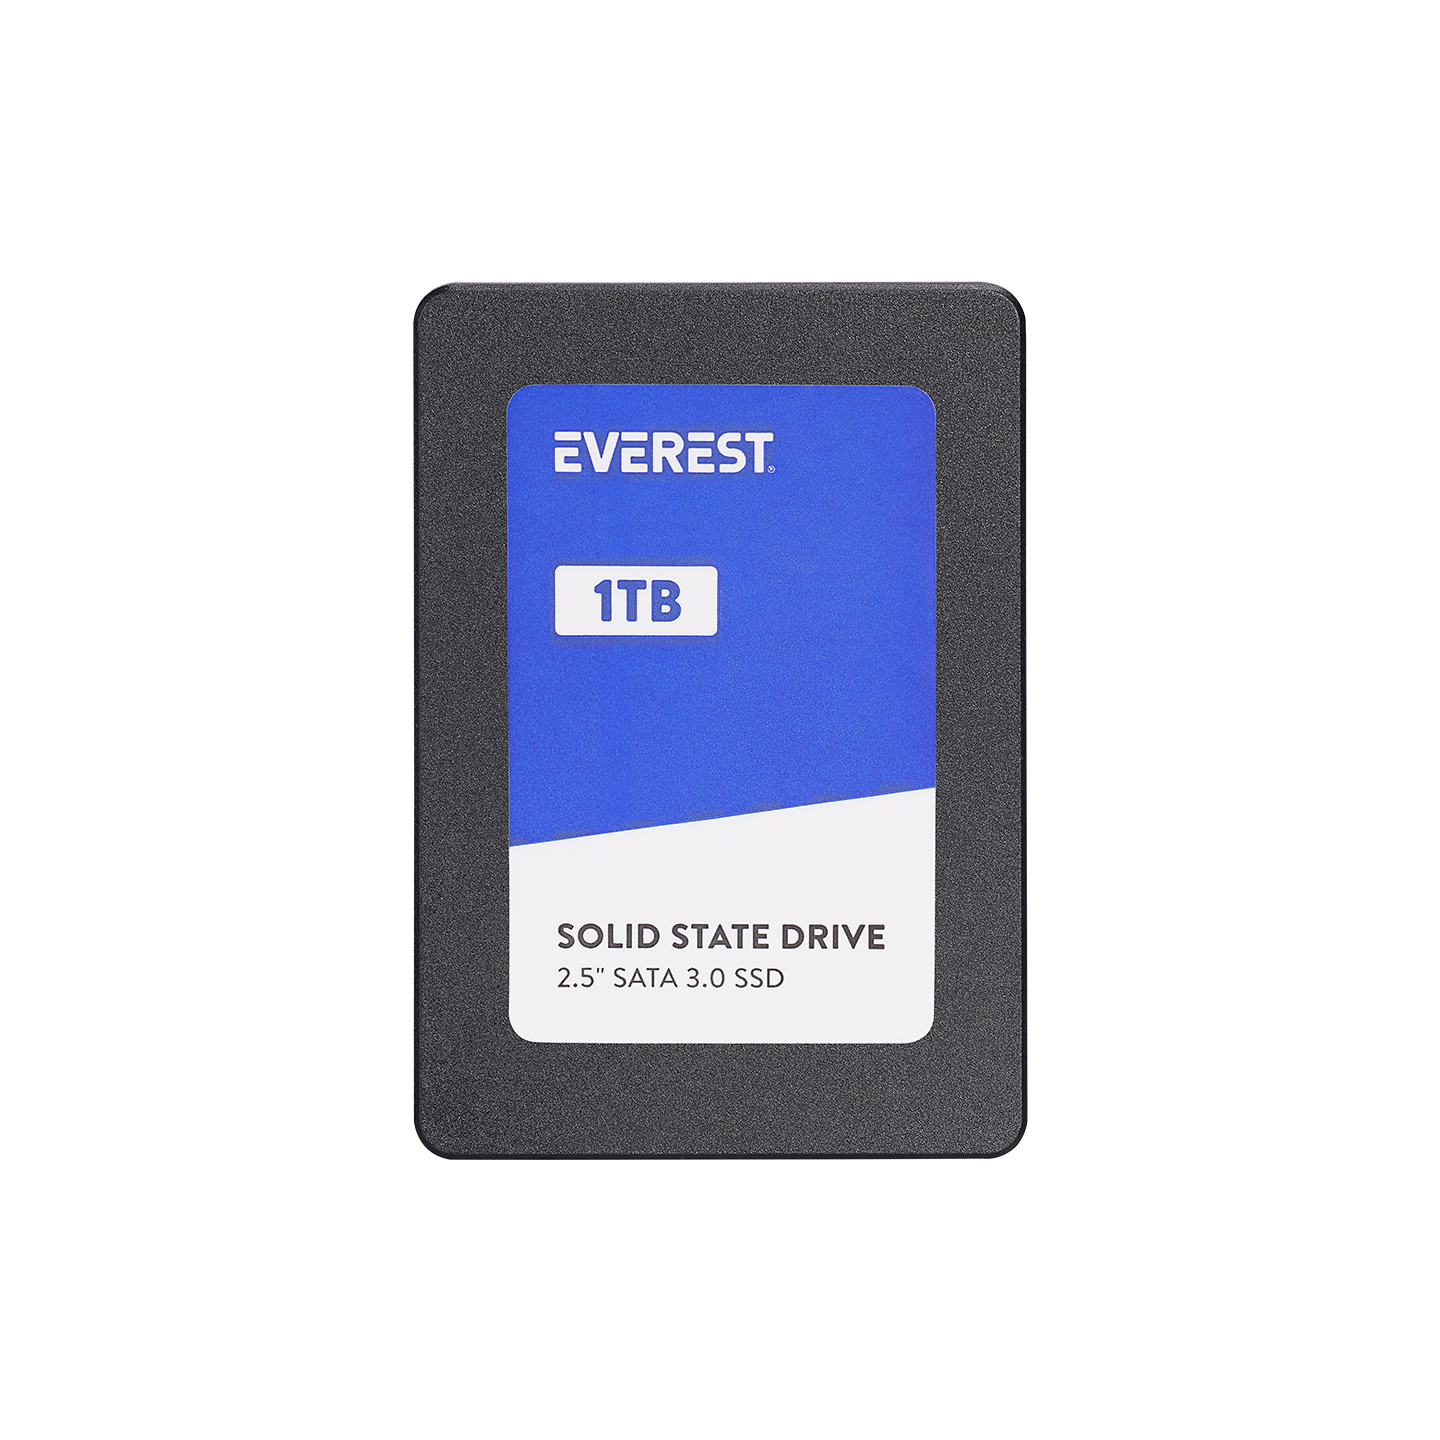 Everest ES1000A 1TB 2.5 SATA3.0 550MB/460MB 3D NAND Flash SSD (Solid State Drive)